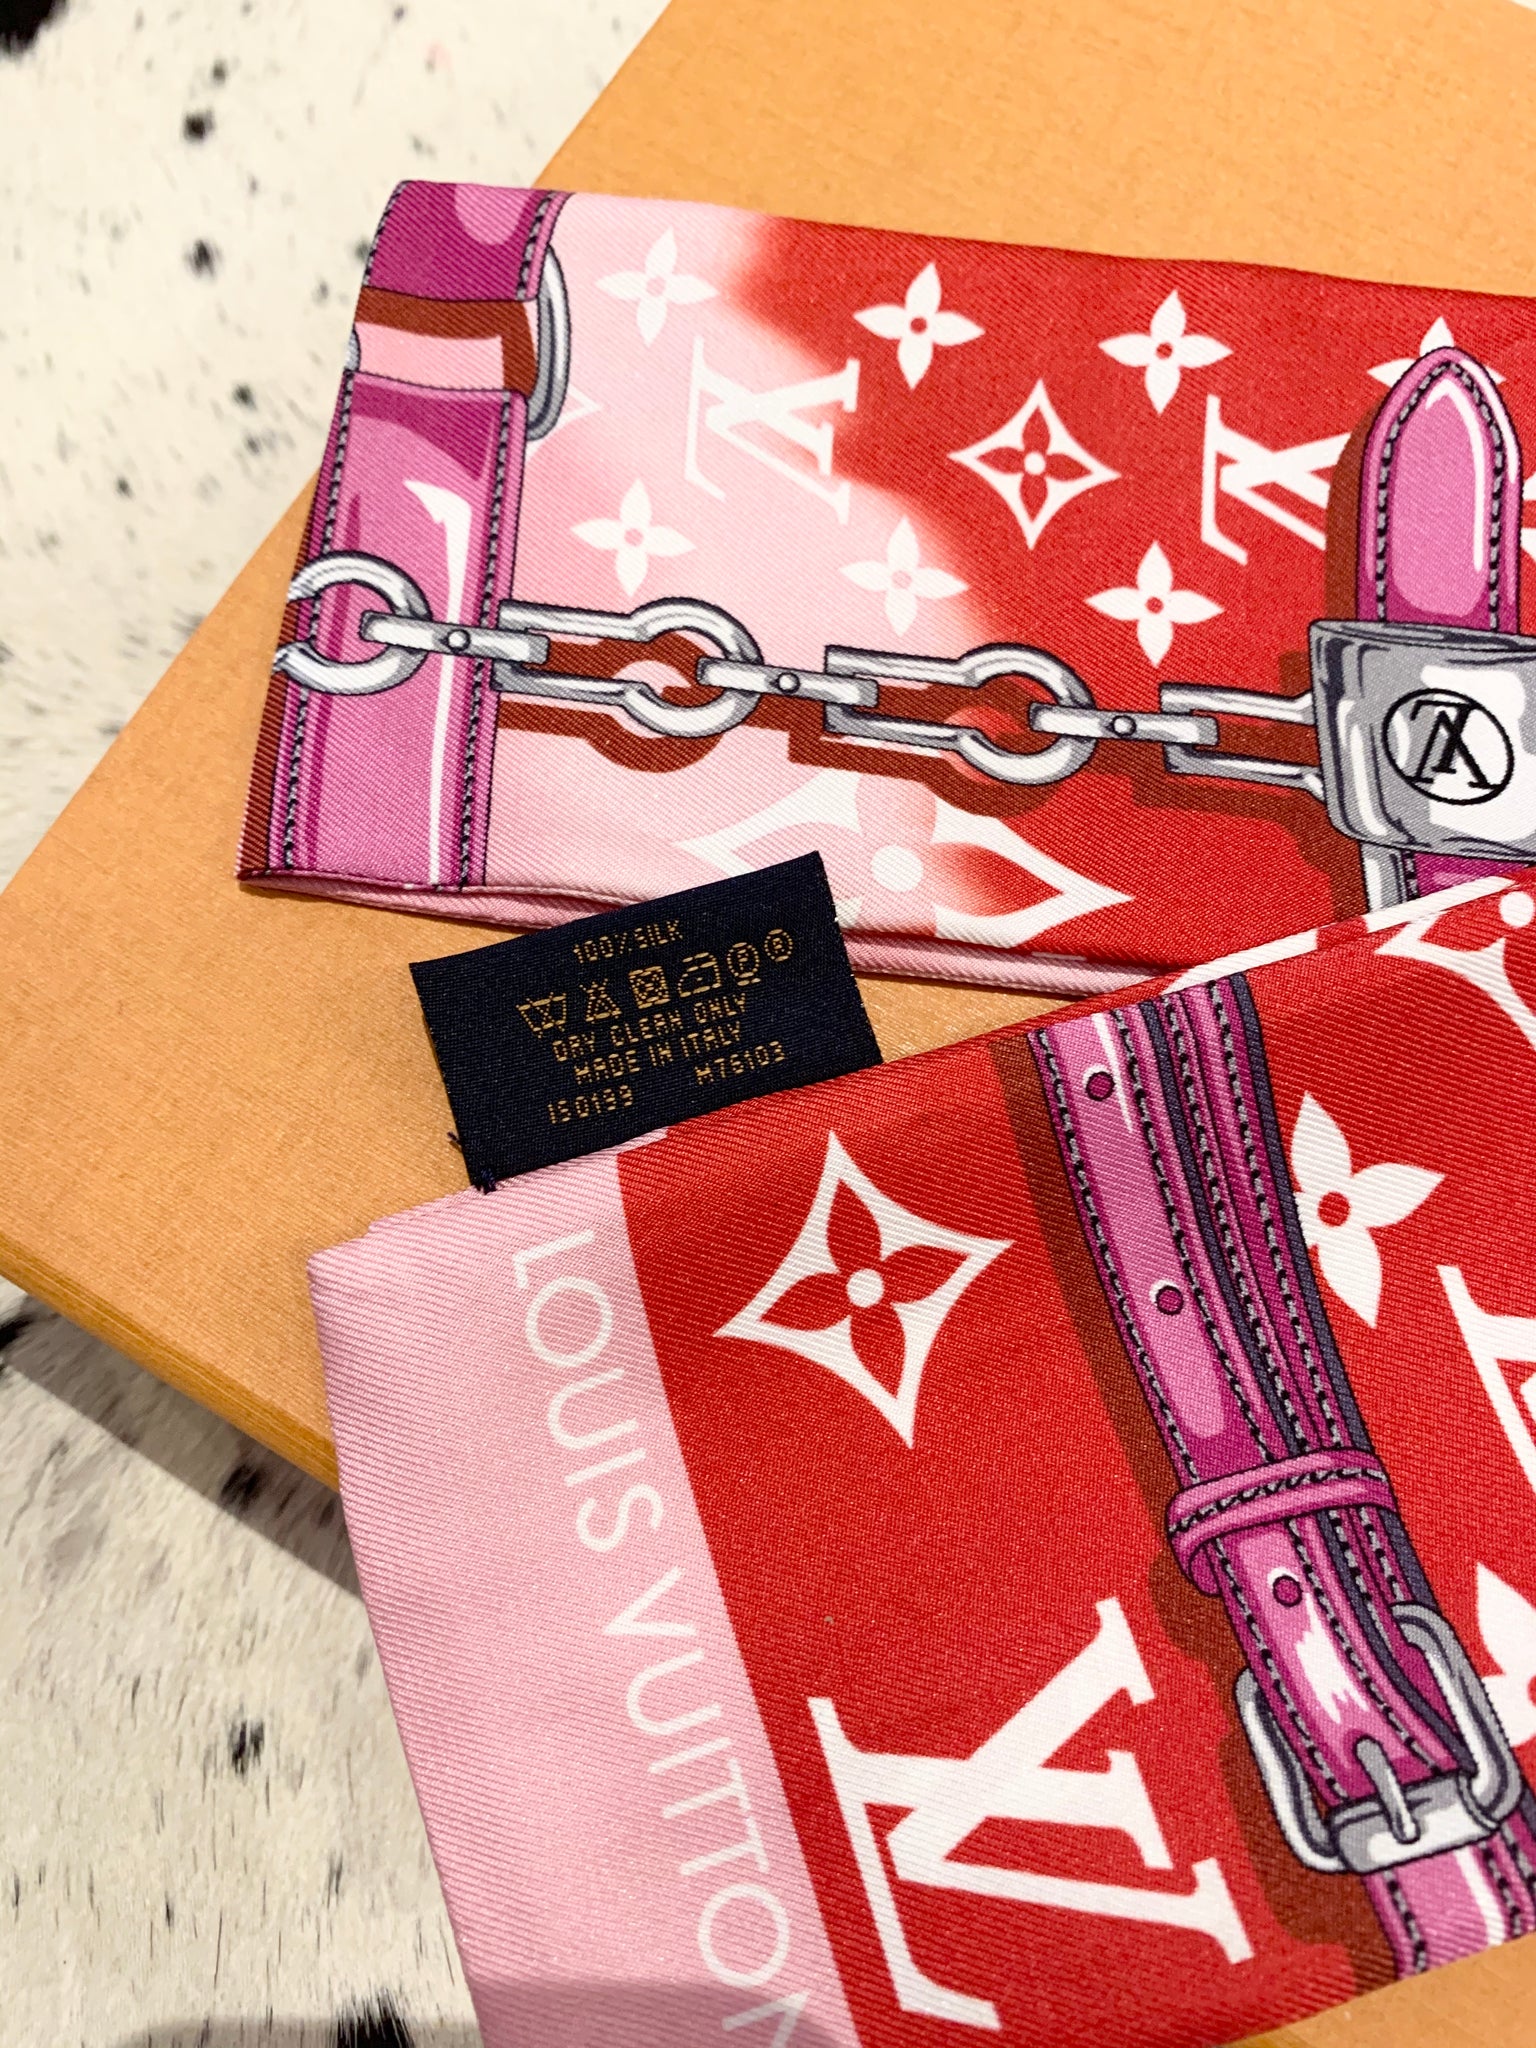 Louis Vuitton Pink Silk Confidential Bandeau Scarf